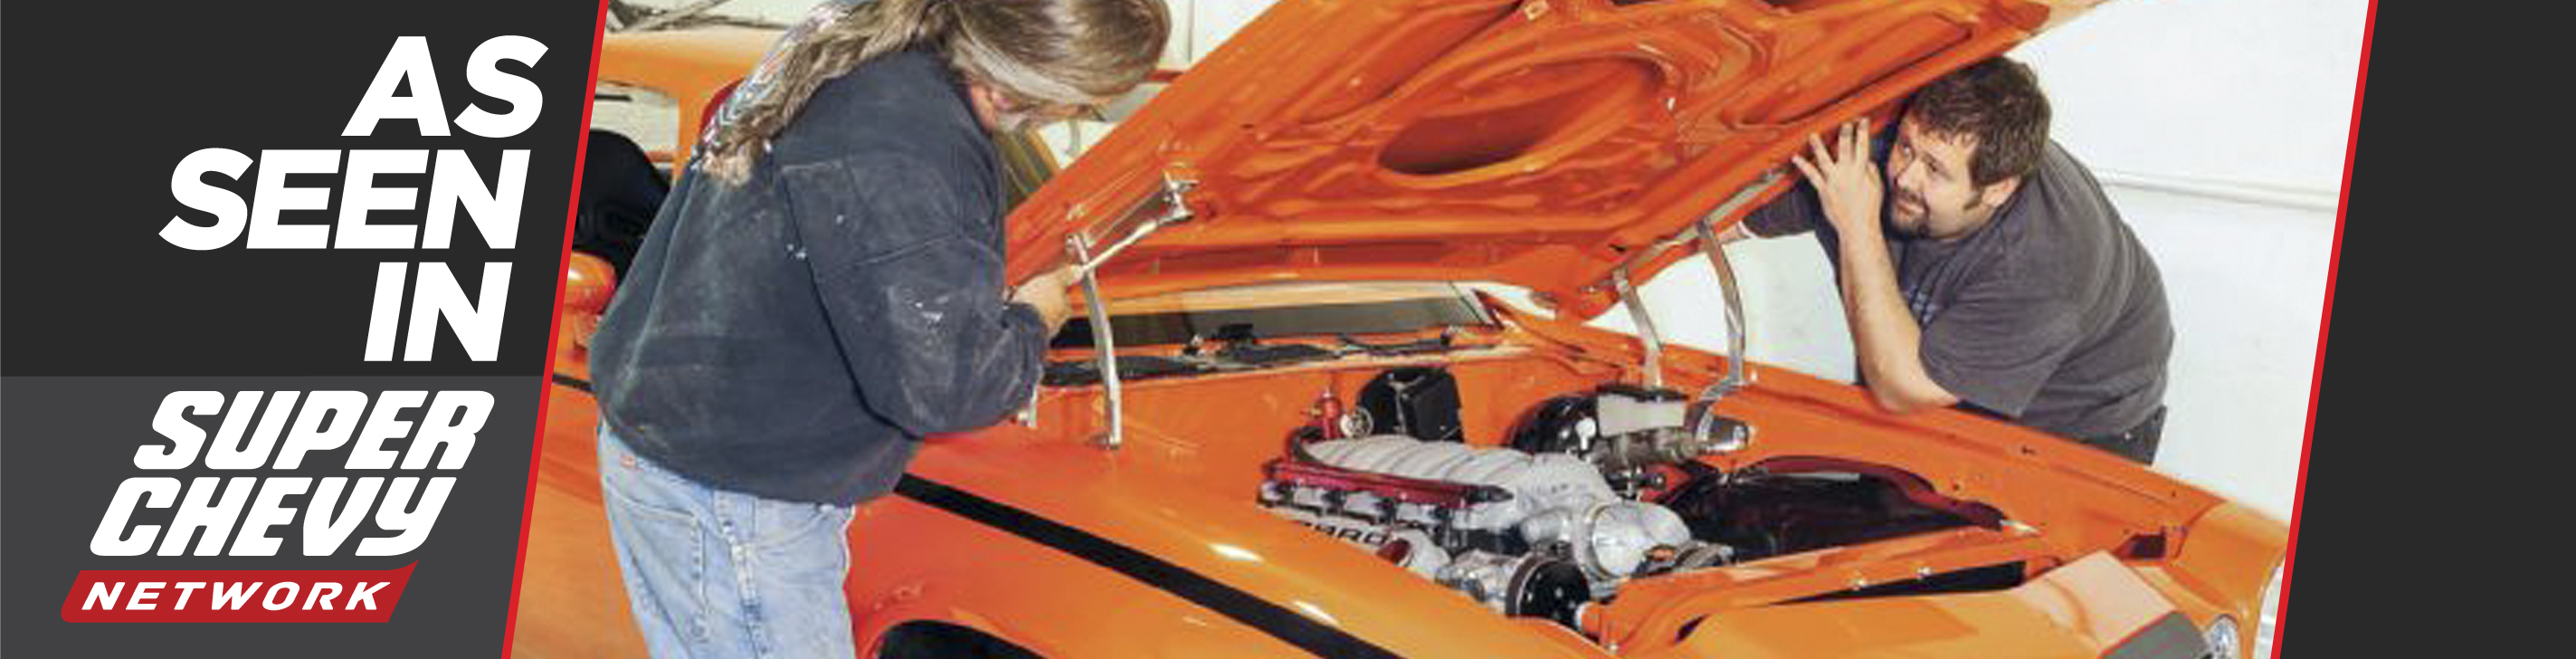 1971 Chevrolet Camaro Project Orange Krate - Split Bumper and Finishing Paint